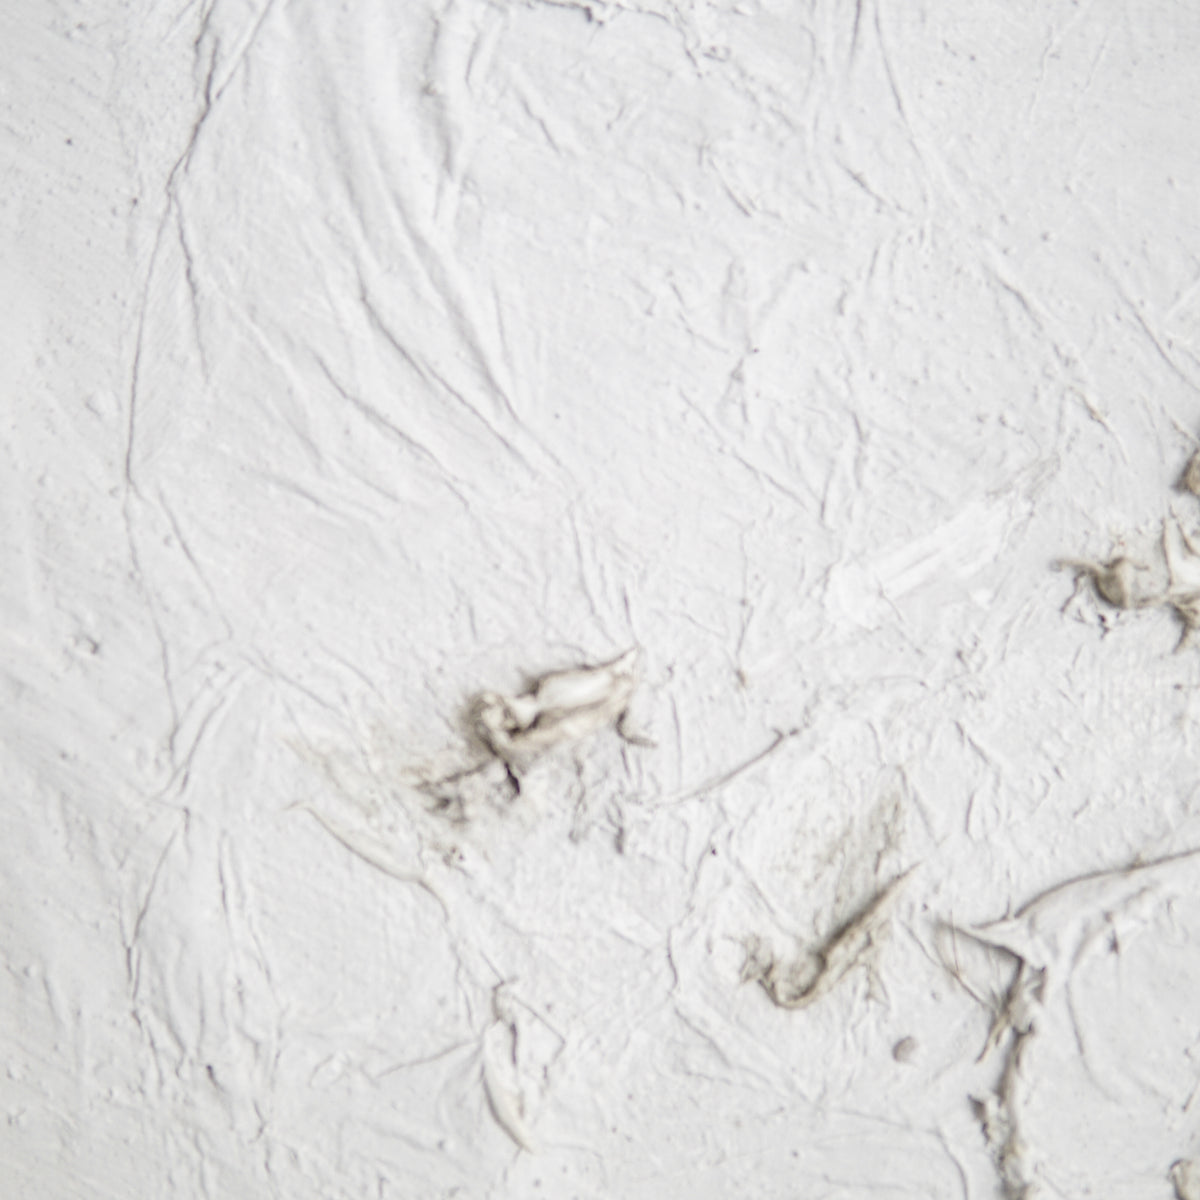 Ana Moraes | sem título VI, 2021 | 110x70 cm | Tinta spray, cimento, silicone e papel sobre tela